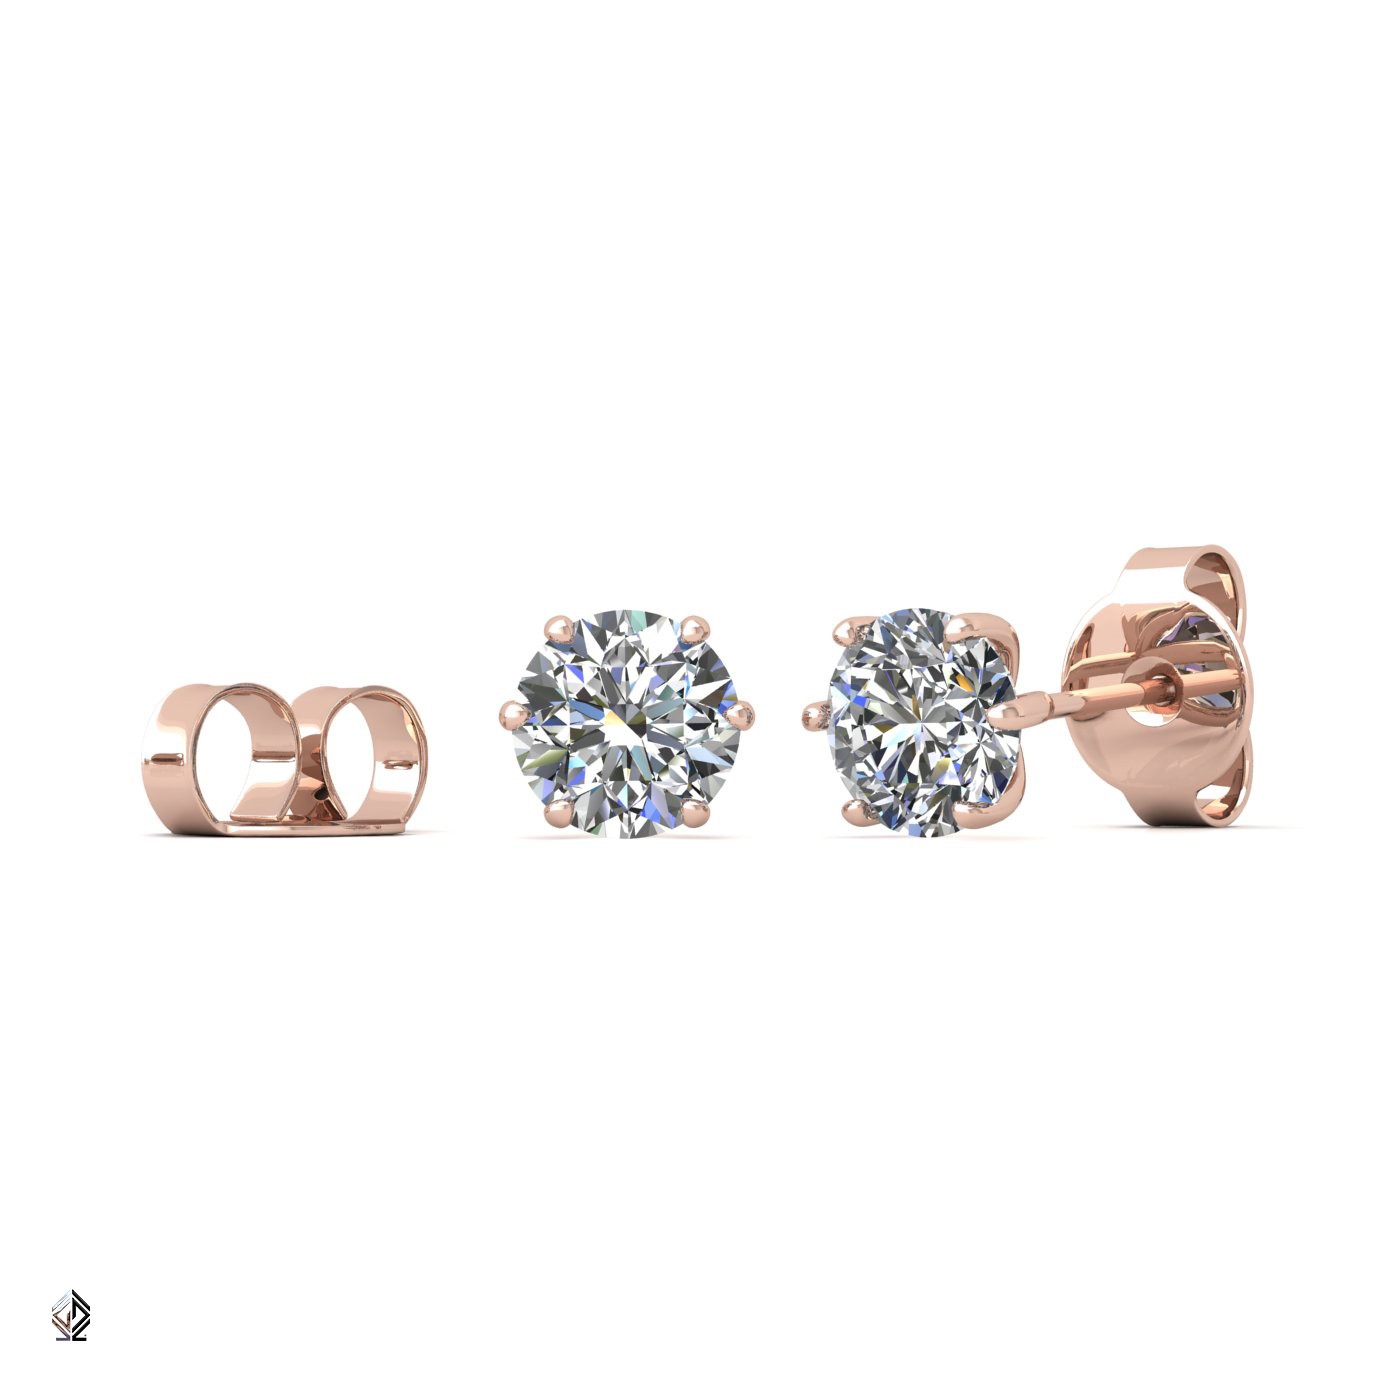 18k rose gold 0,3 ct each (0,6 tcw) 6 prongs round shape diamond earrings